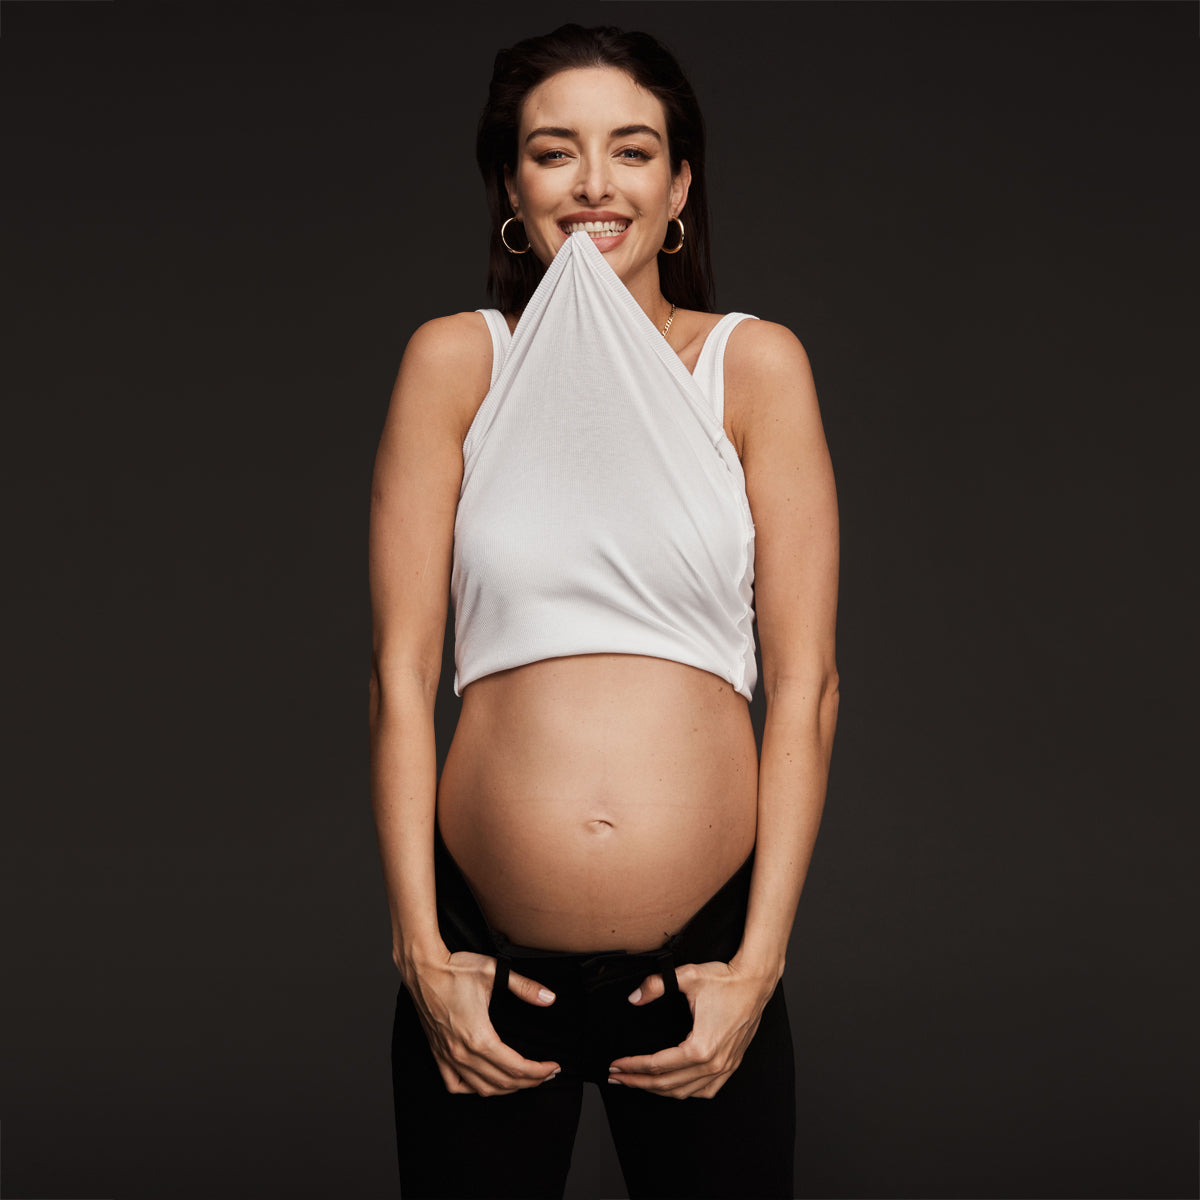 Designer Maternity Clothes, Dresses & Post-Pregnancy- A Pea in the Pod